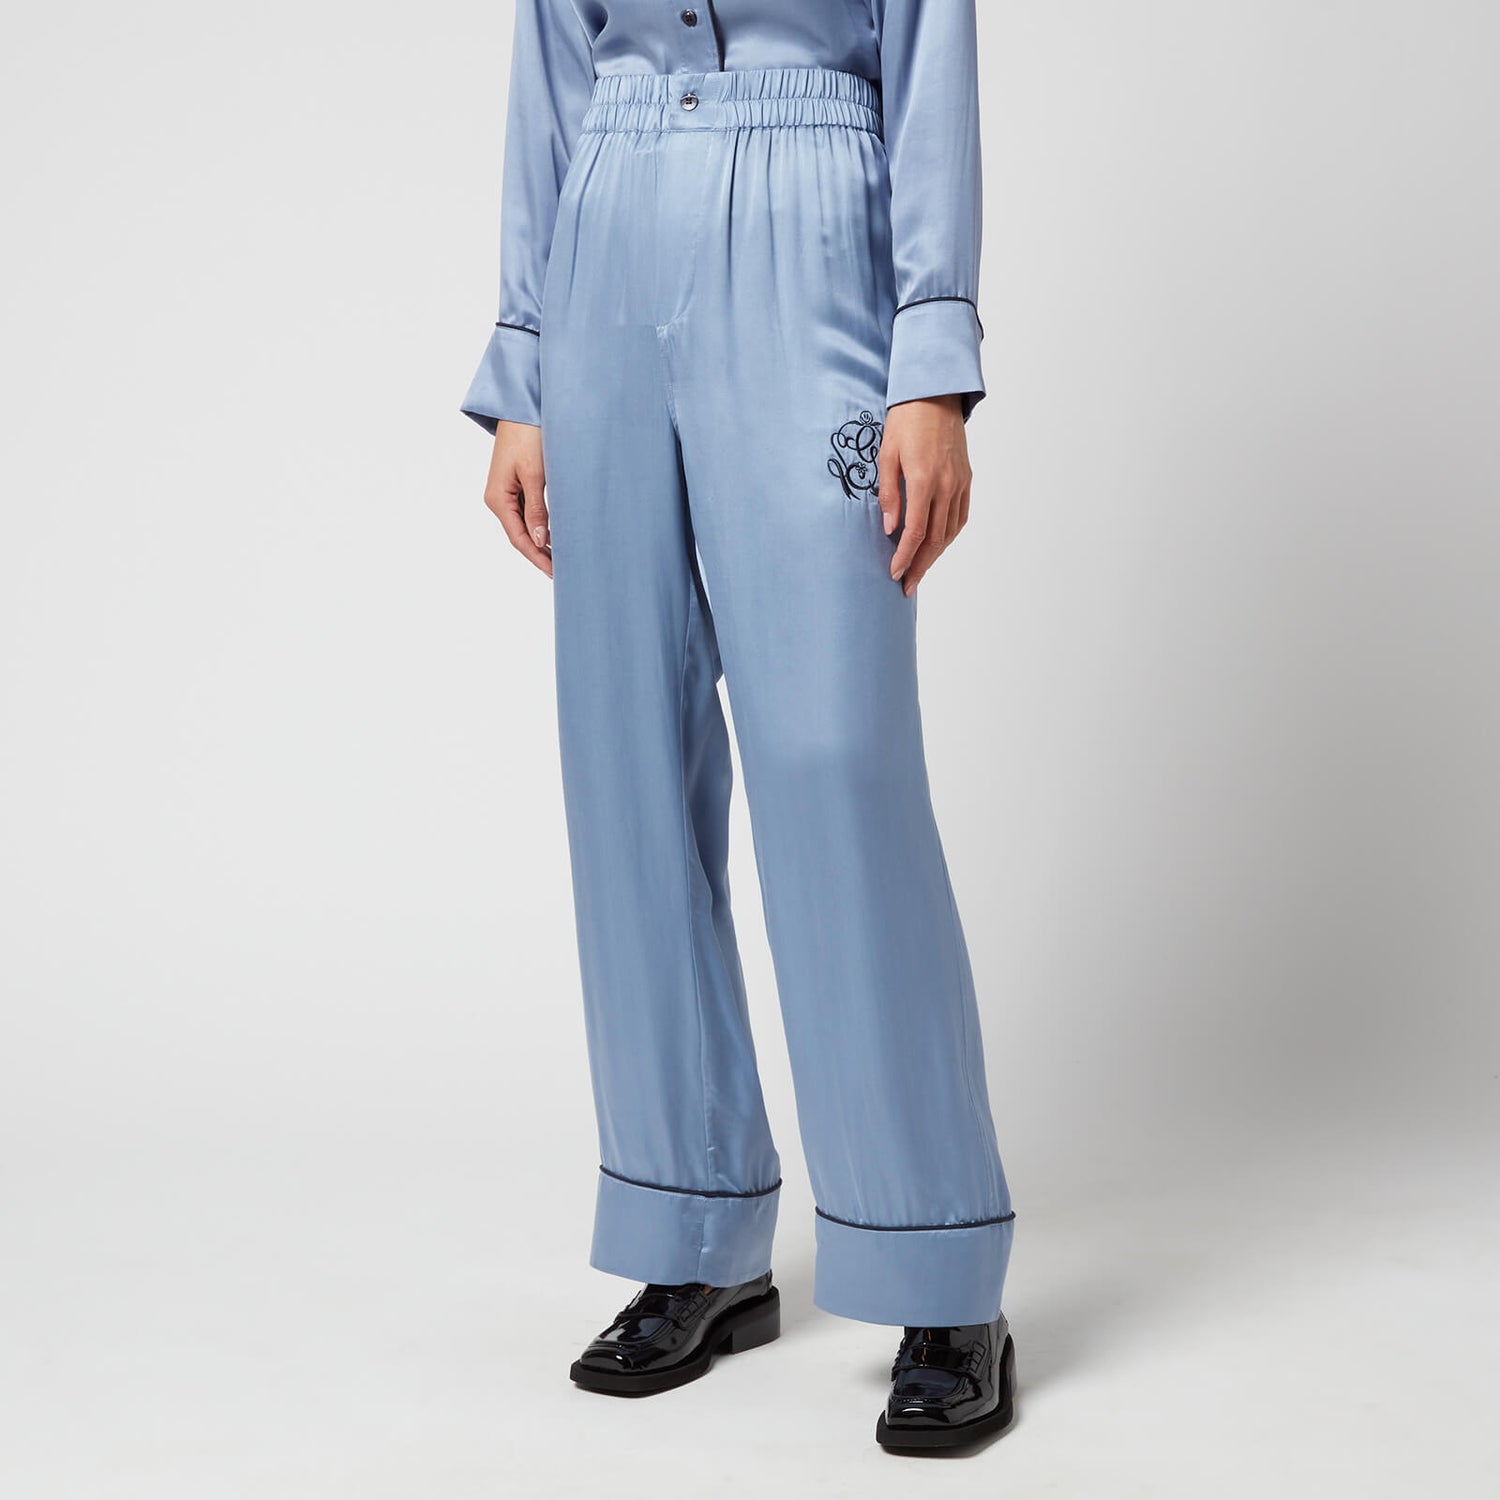 Ganni Women's Silk Pyjama Trousers - Tempest - EU34/UK6